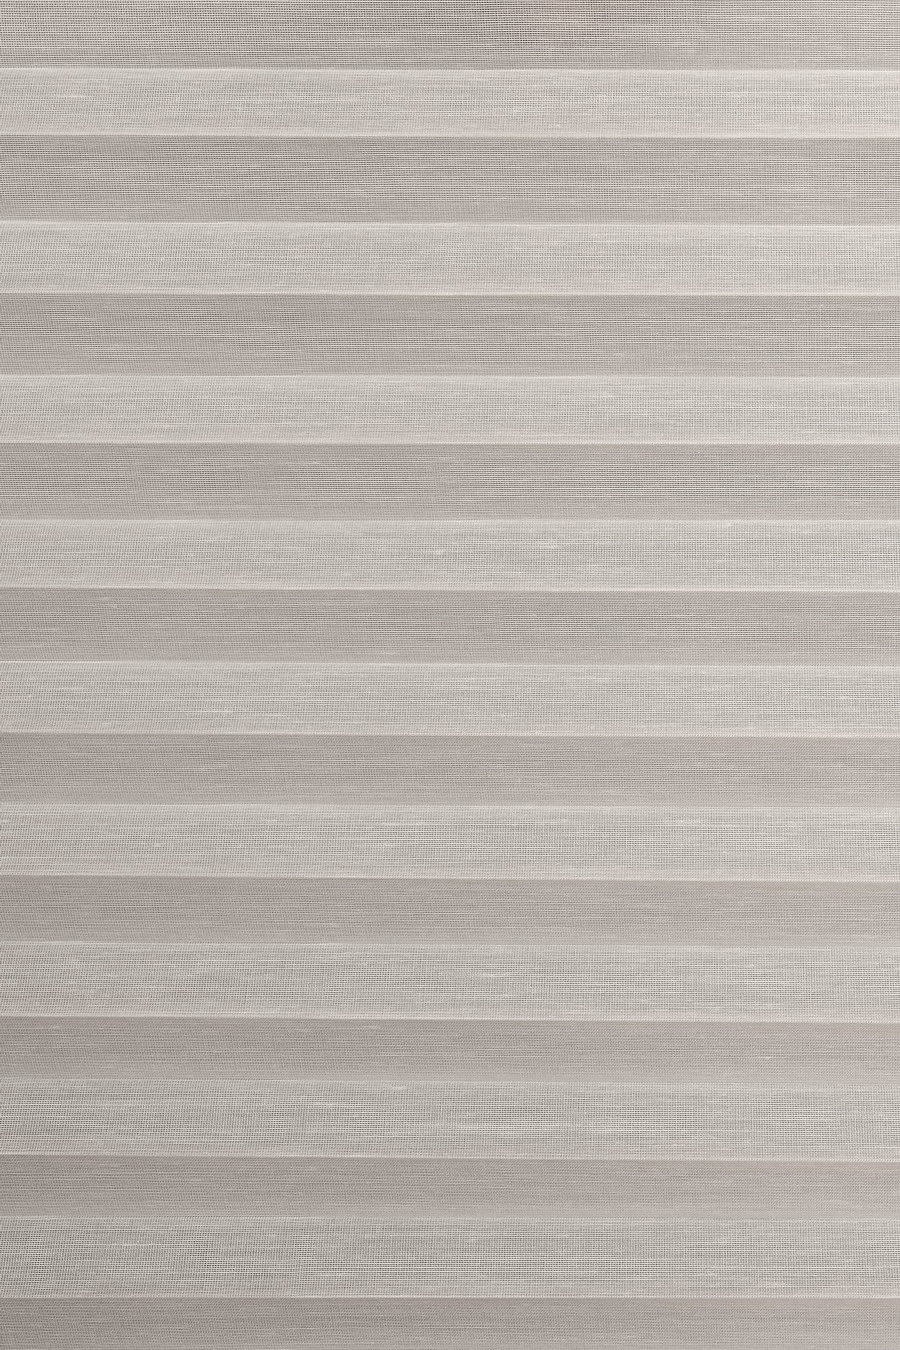 Ткань TRANSPARENT marquisette-white 10581 для штор плиссе